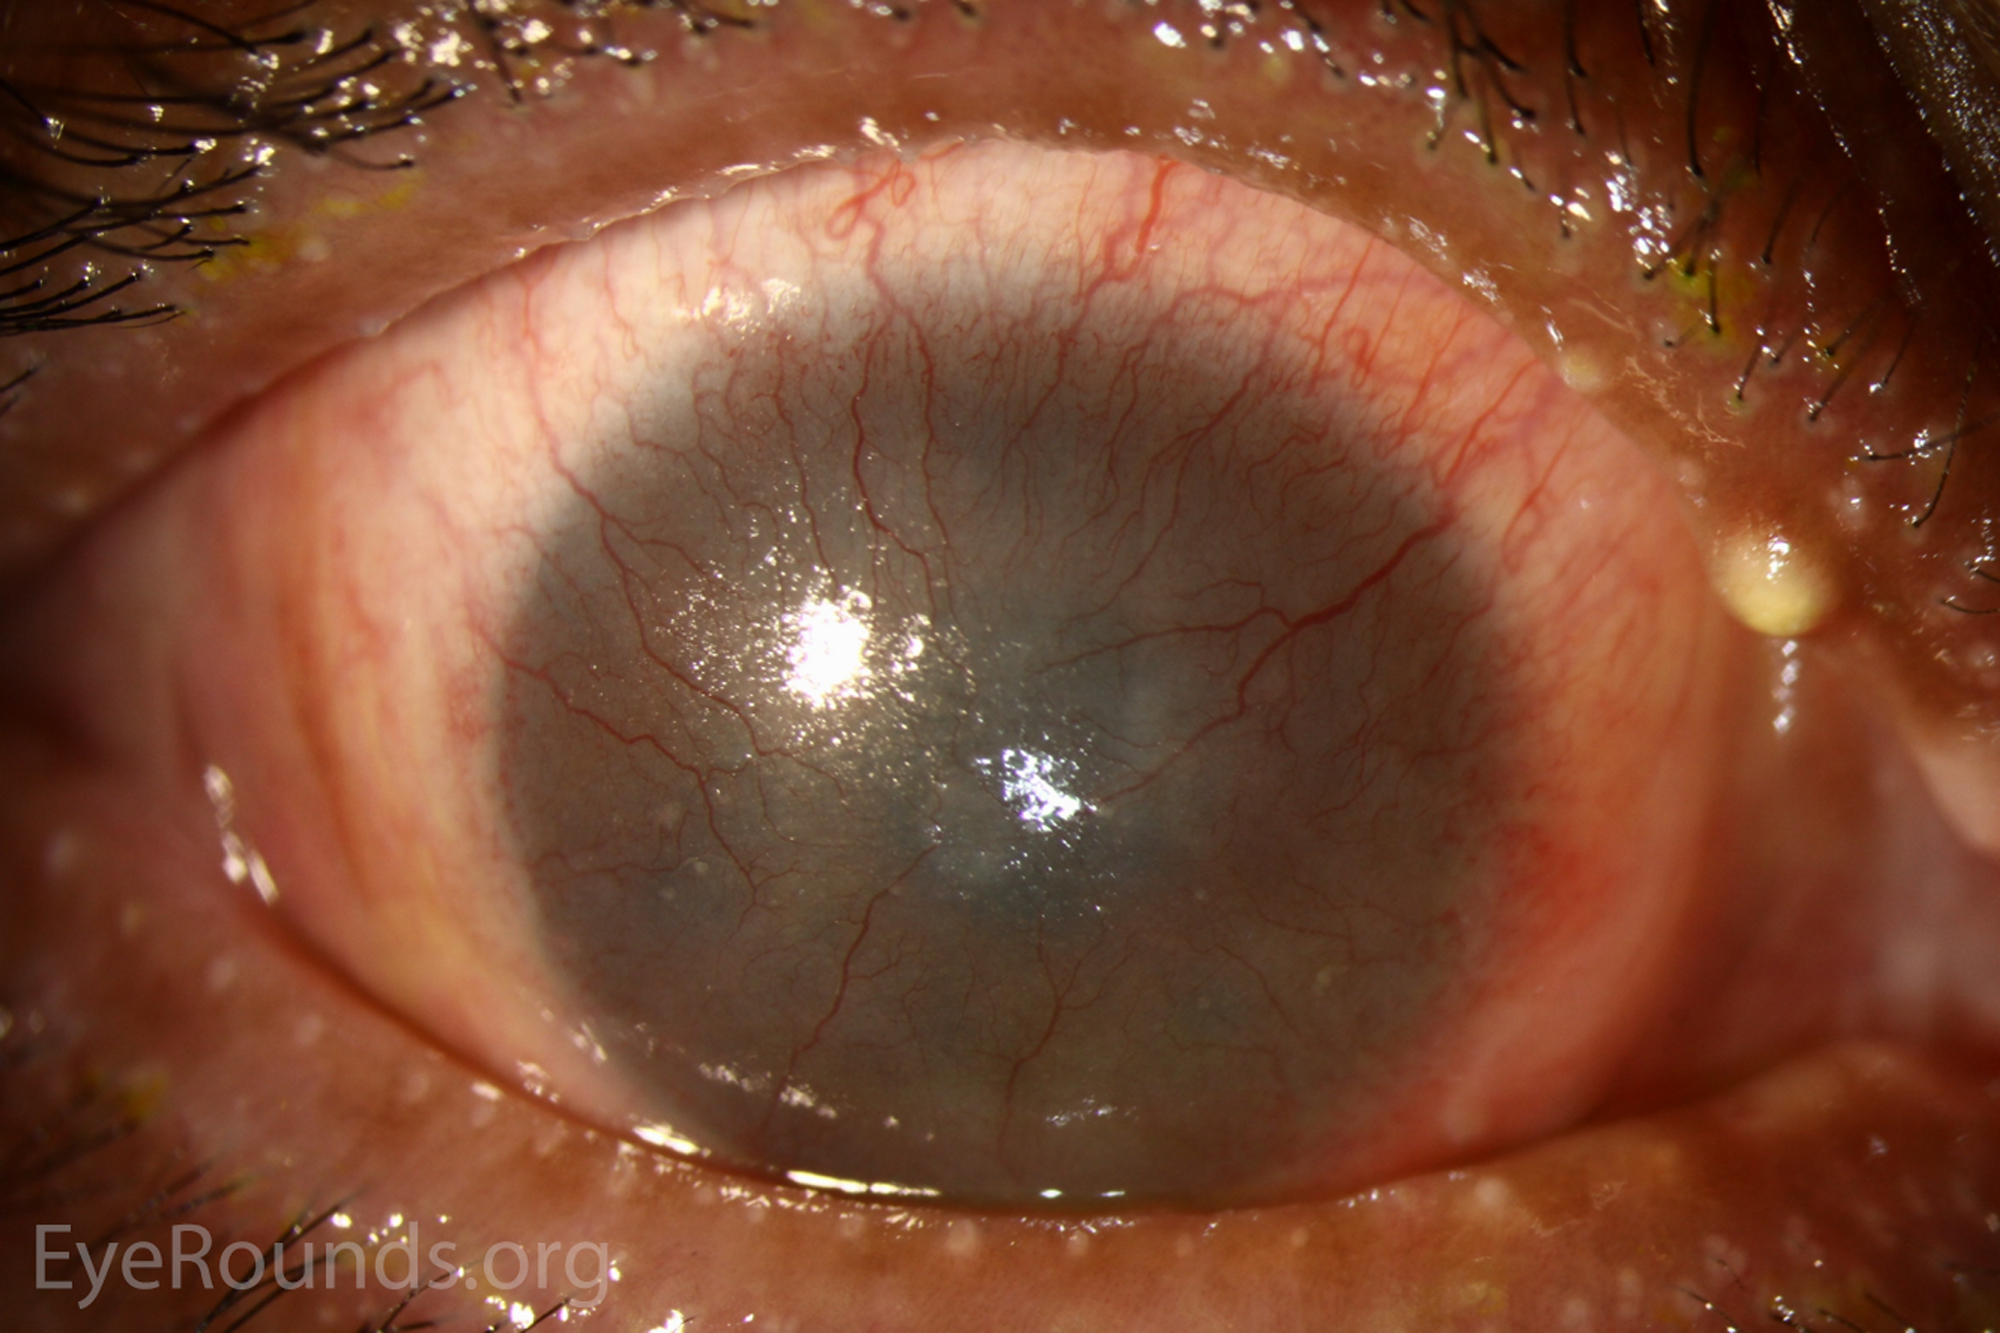 Corneal pannus is subepithelial fibrovascular tissue ingrowth from the limbus onto the cornea